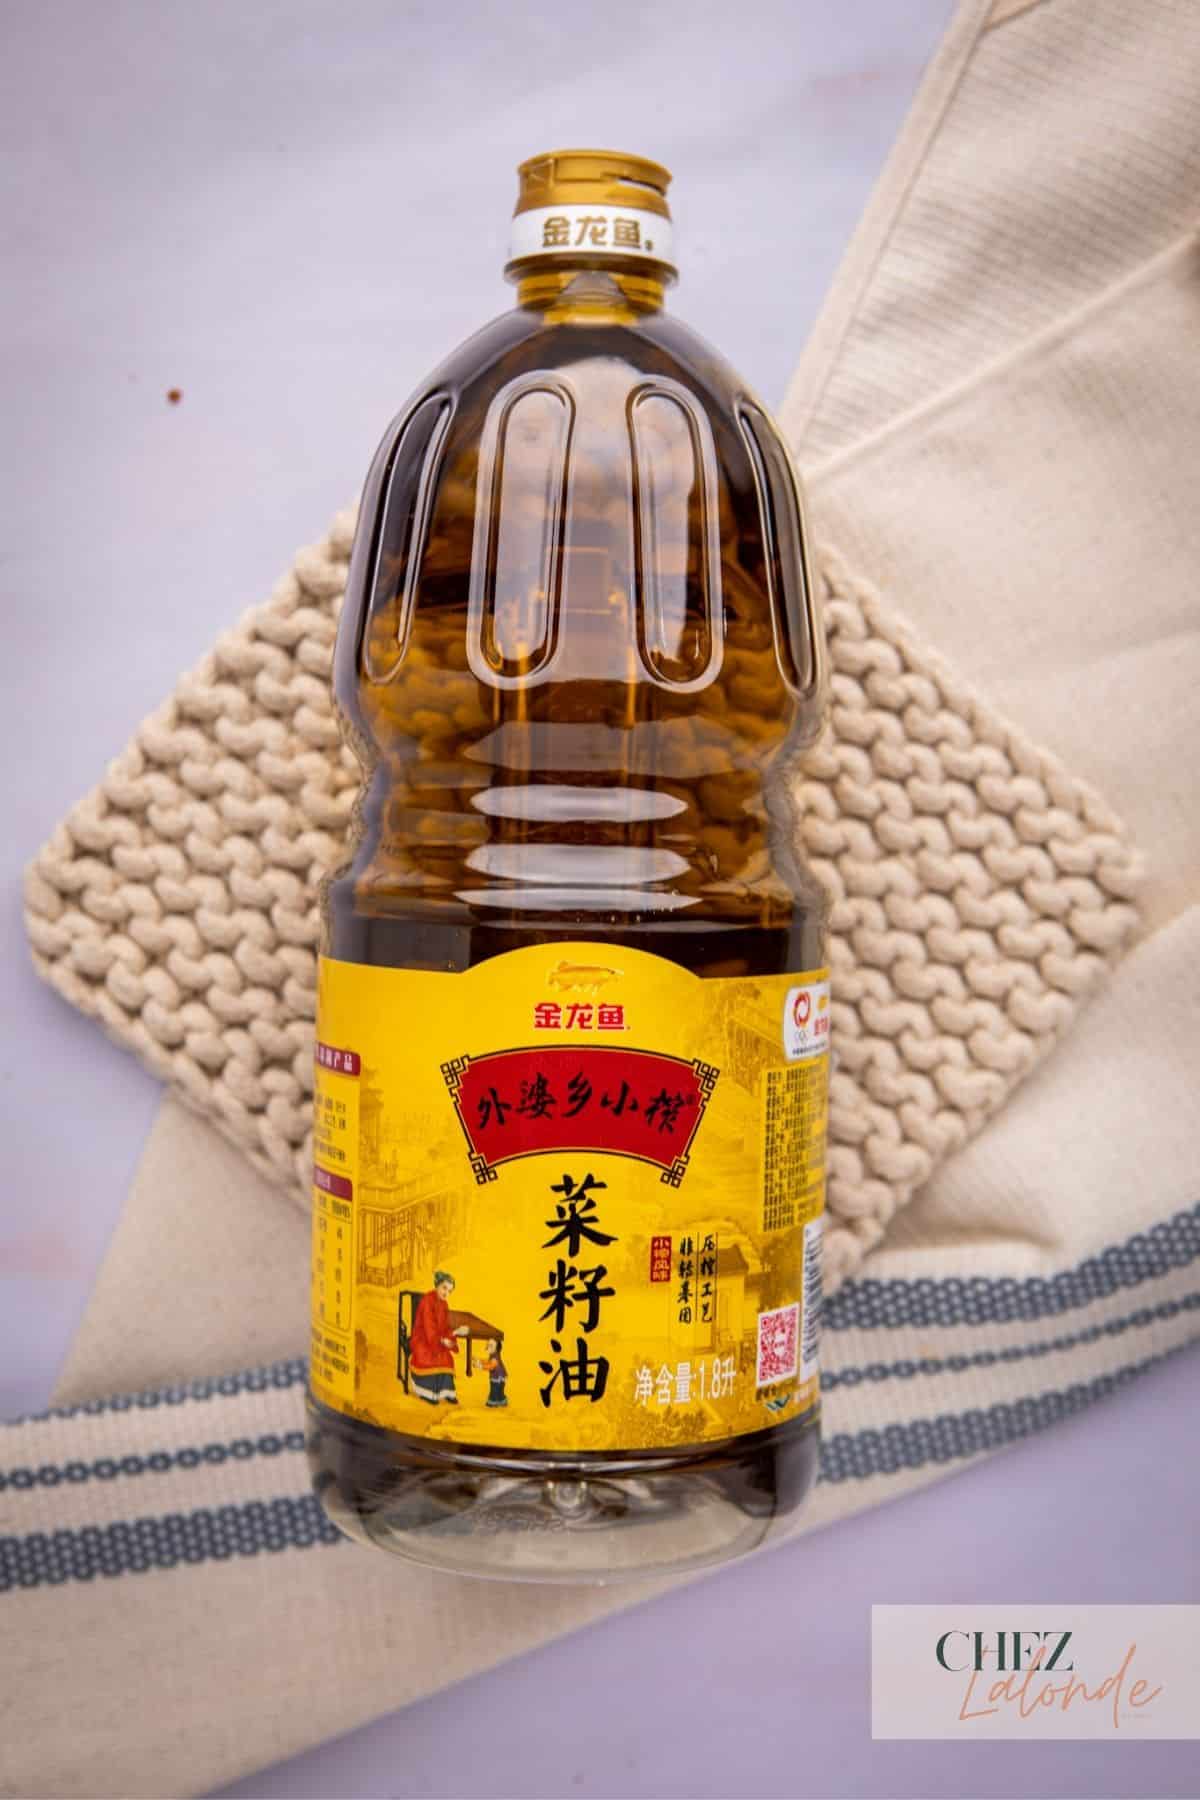 A bottle of Rapeseed oil.